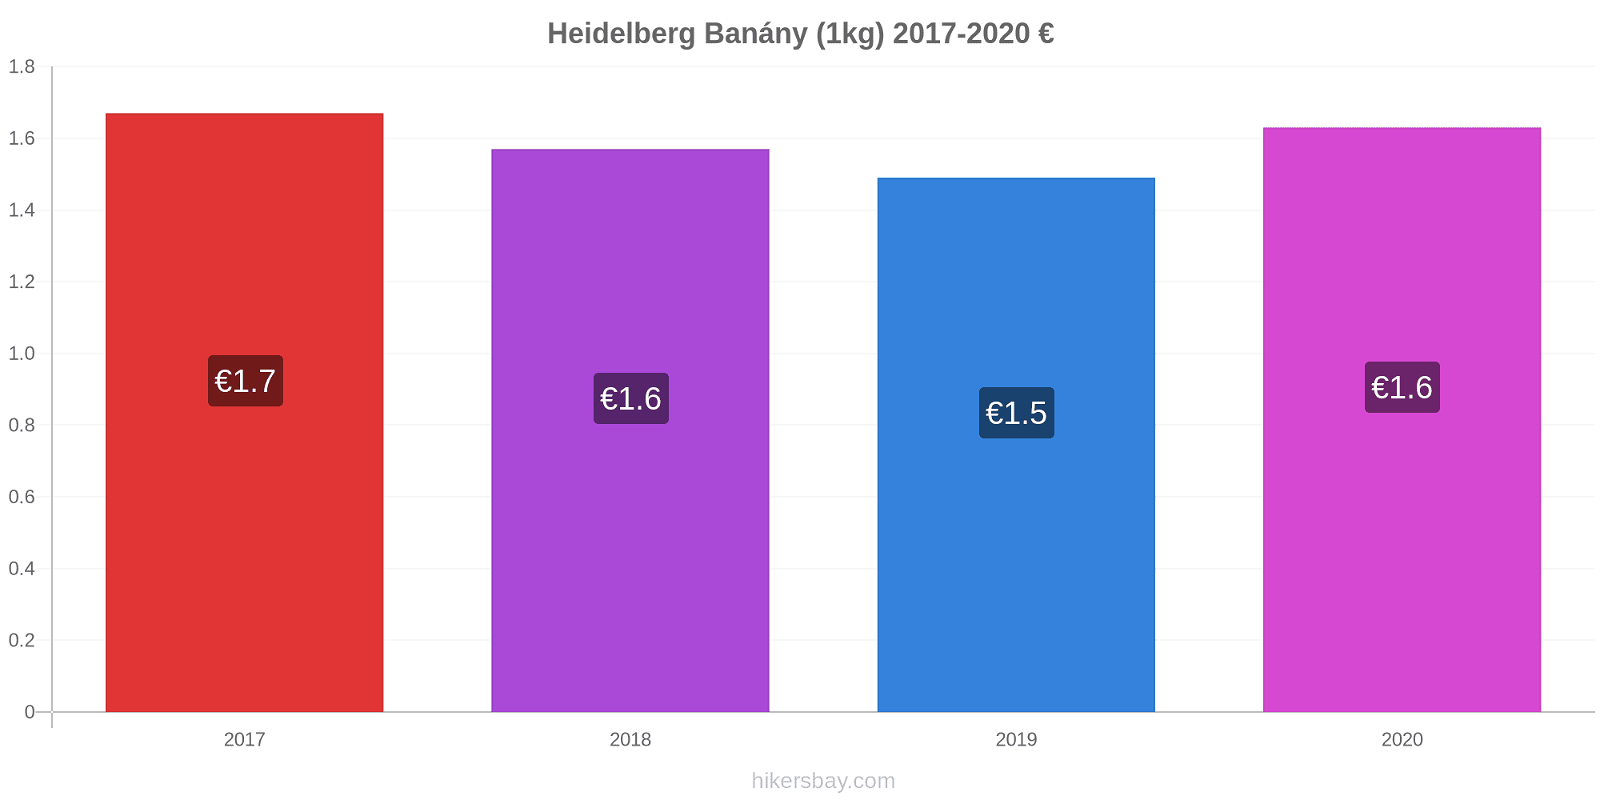 Heidelberg změny cen Banány (1kg) hikersbay.com